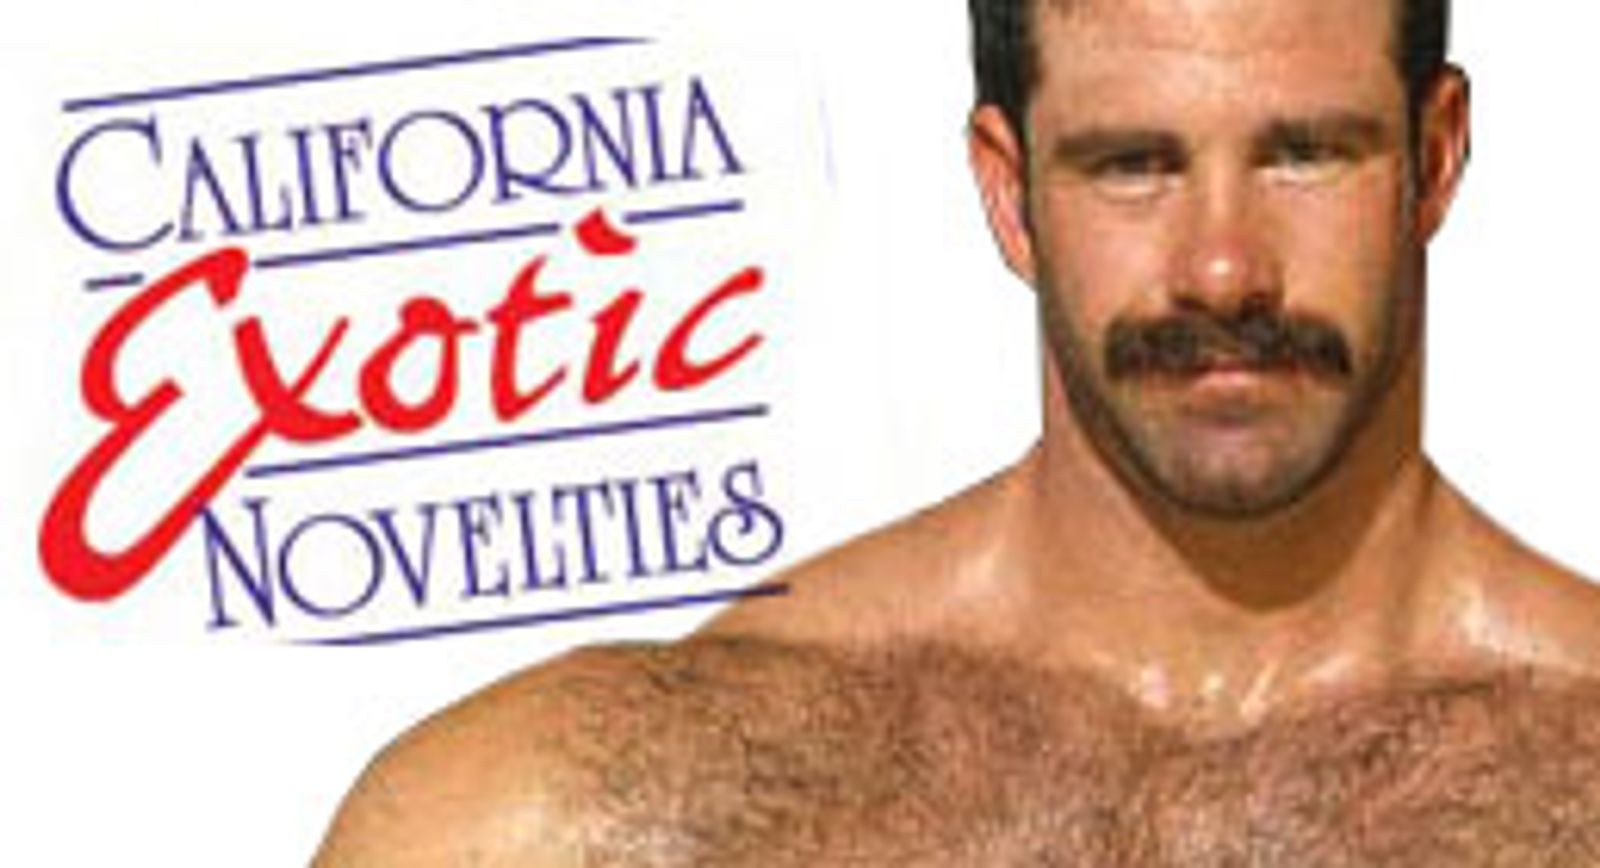 California Exotic Novelties Licenses Colt Brands